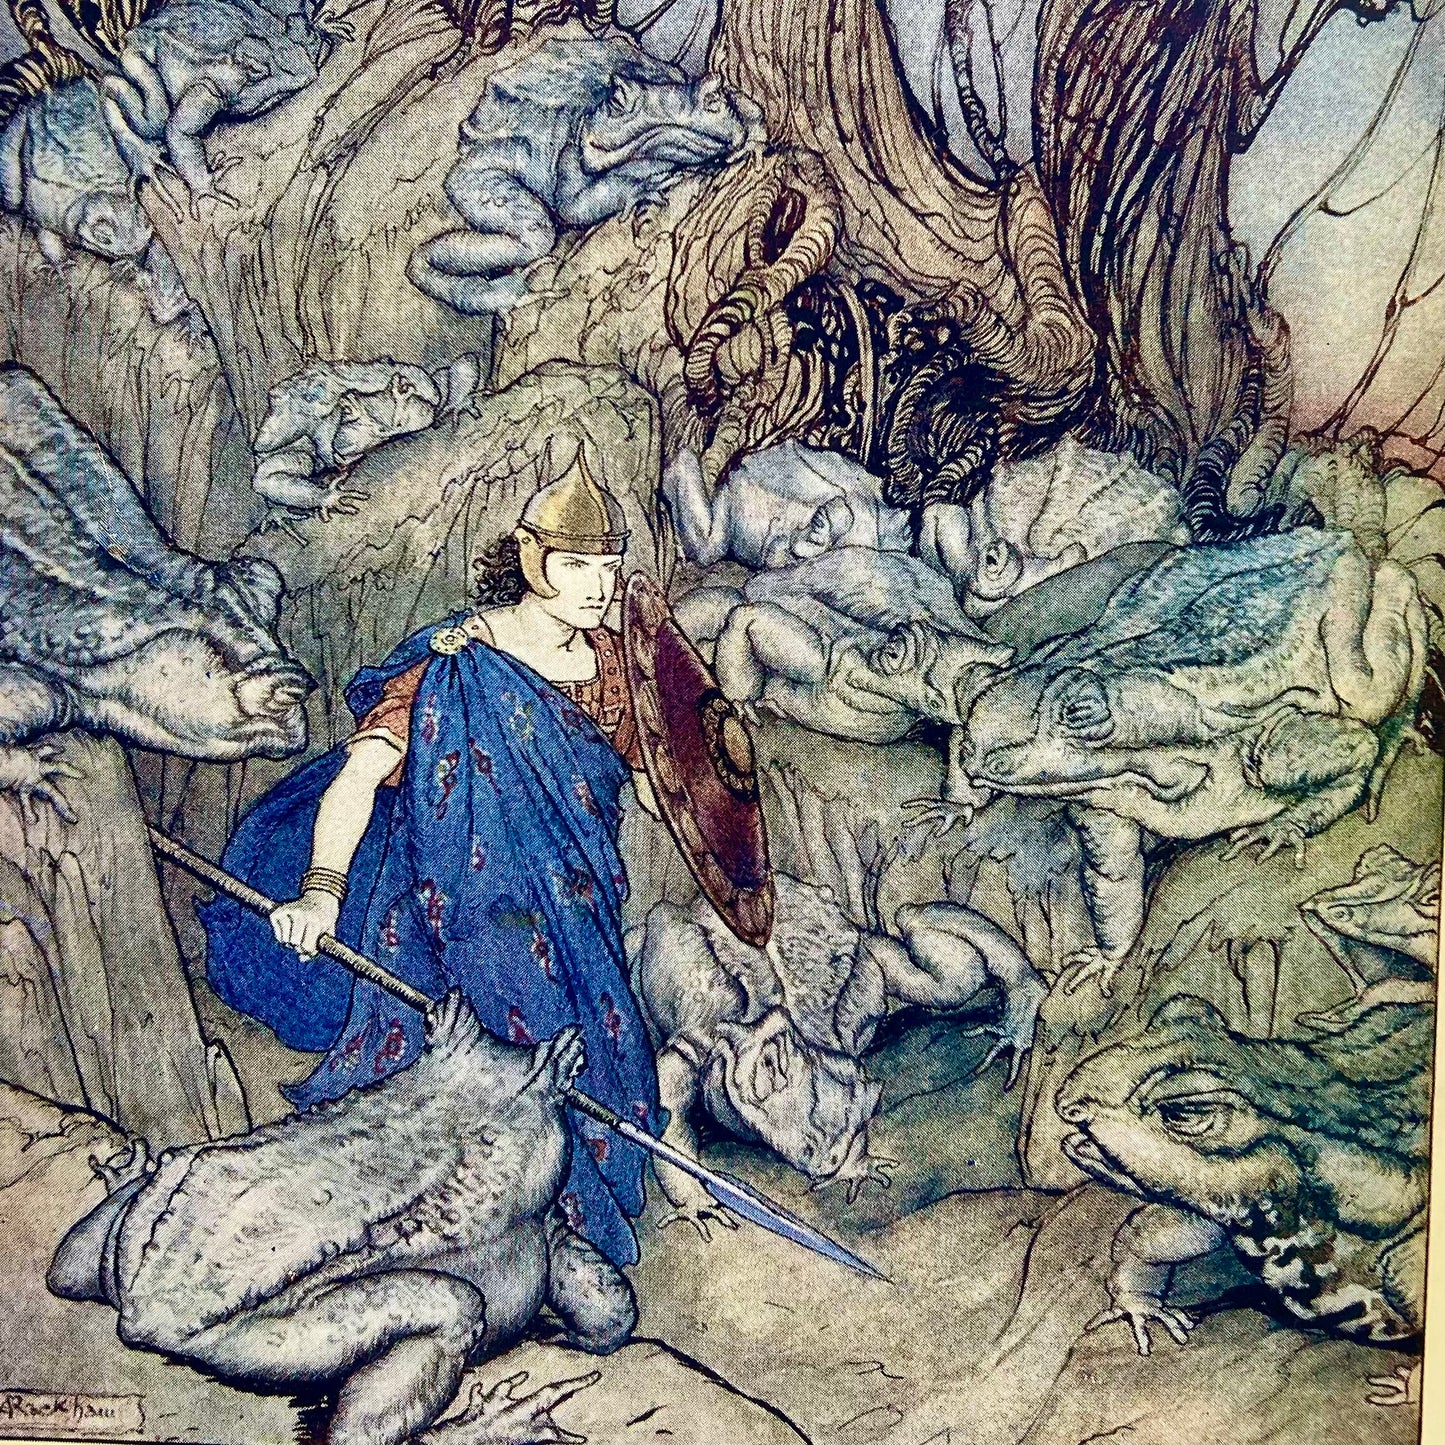 STEPHENS, James "Irish Fairy Tales" [Macmillan & Co, 1920] - Buzz Bookstore